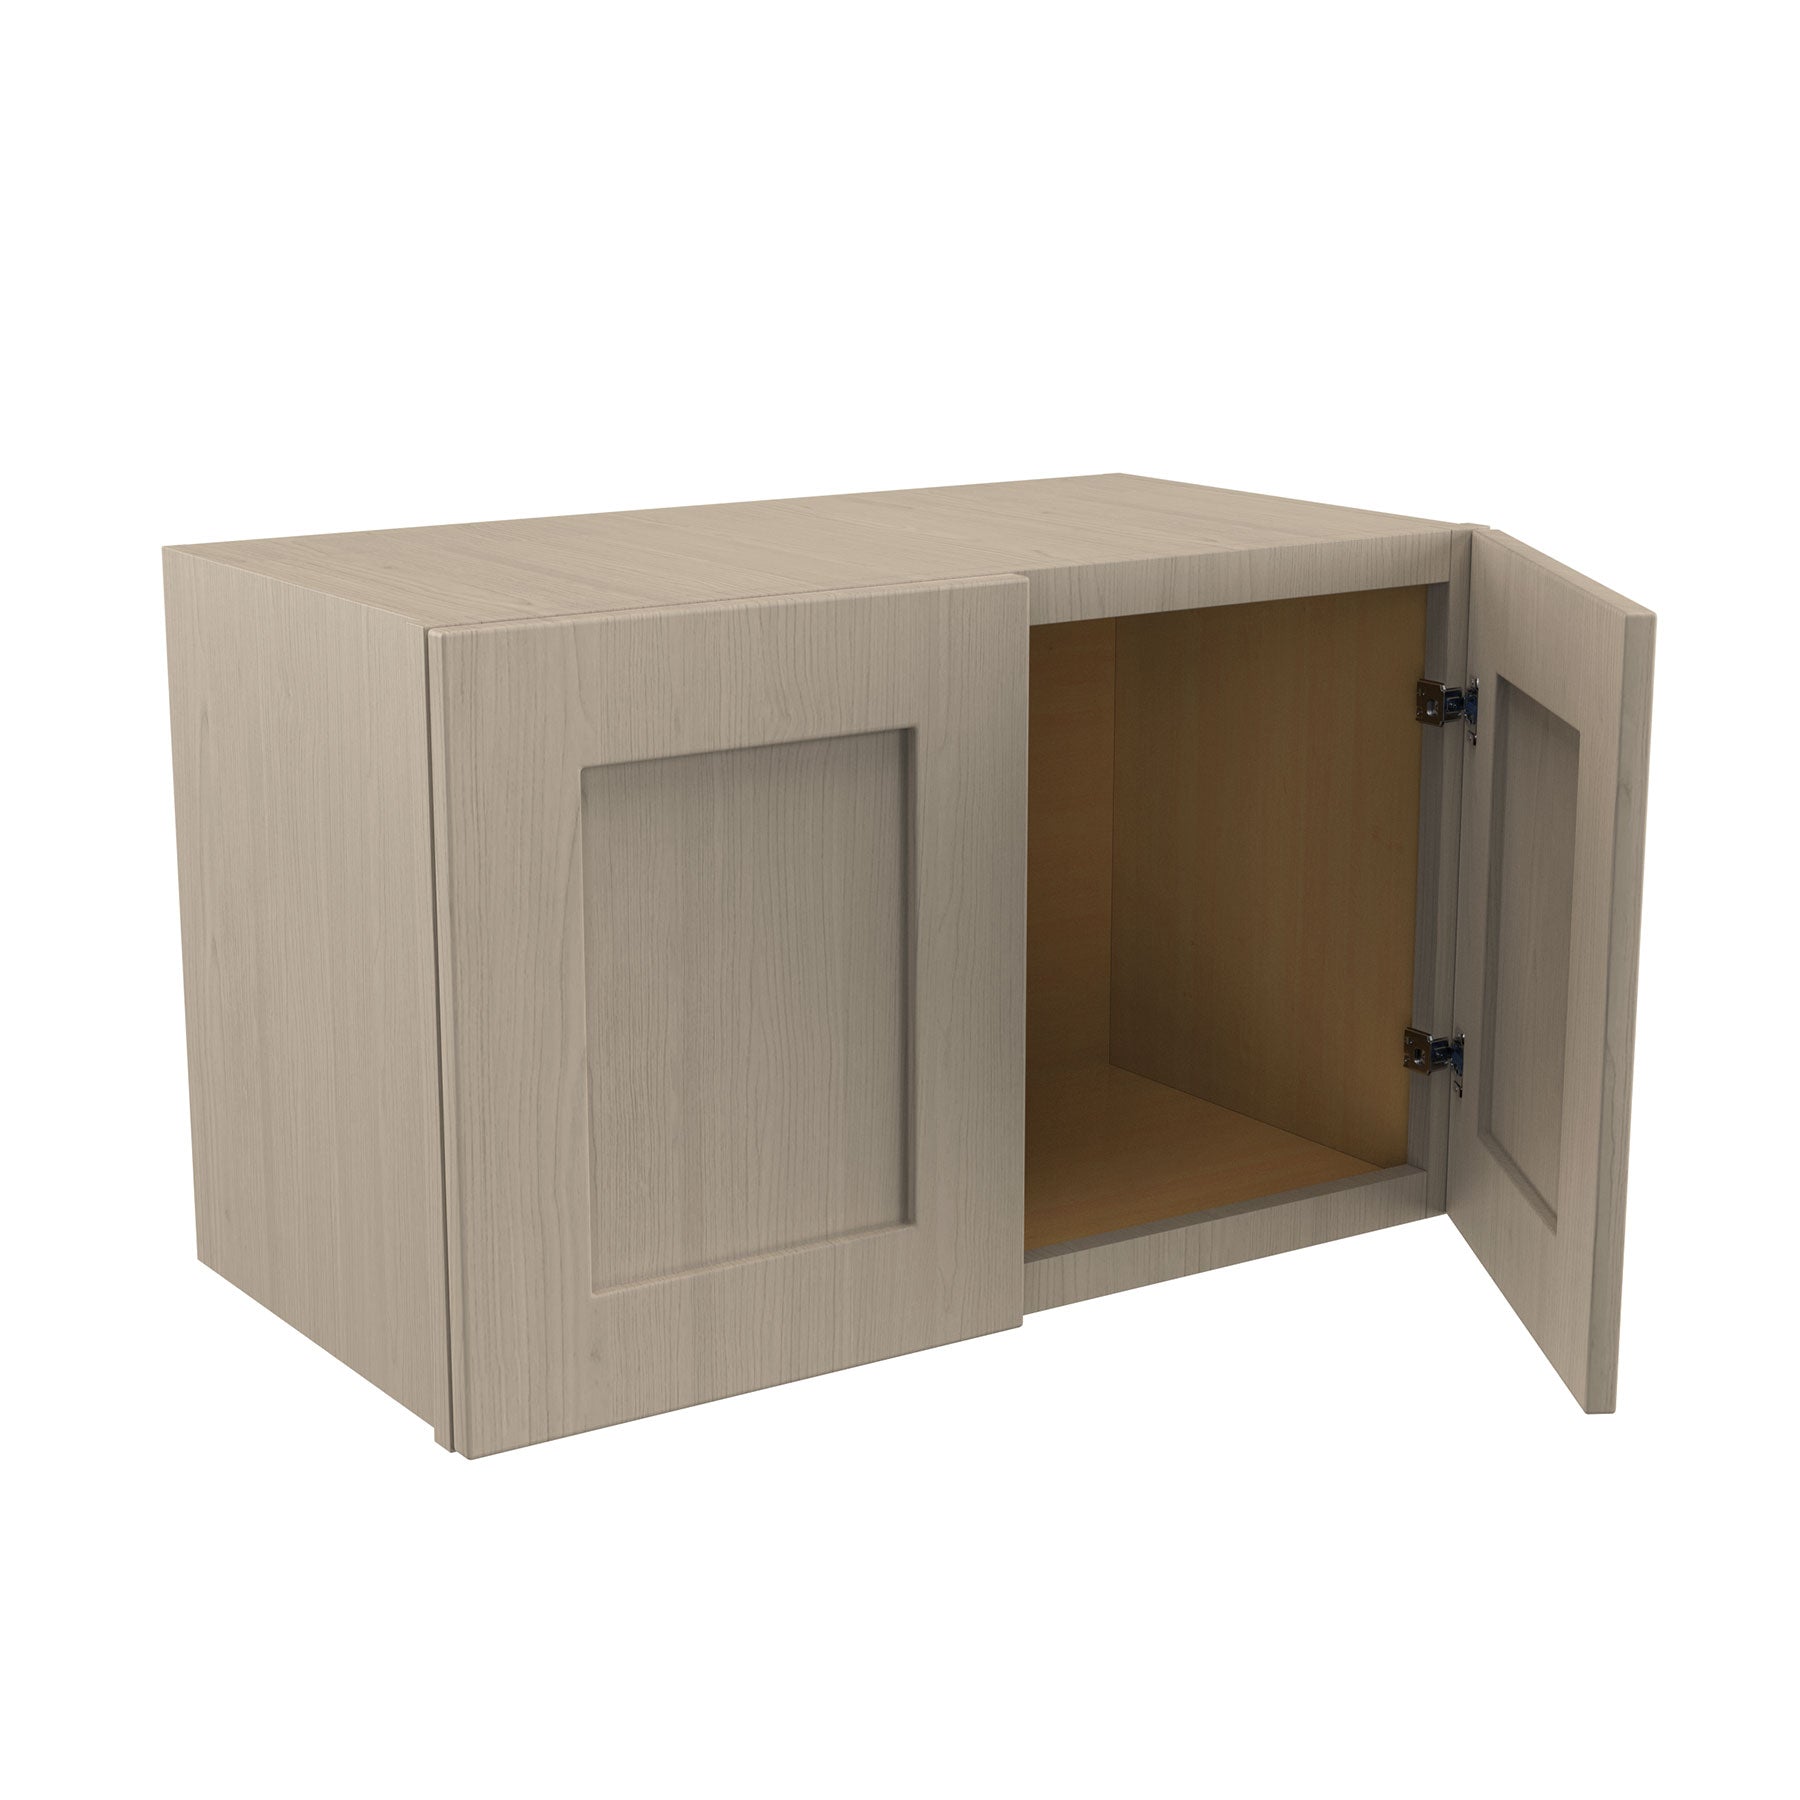 2 Door Wall Kitchen Cabinet | Elegant Stone | 24W x 15H x 12D